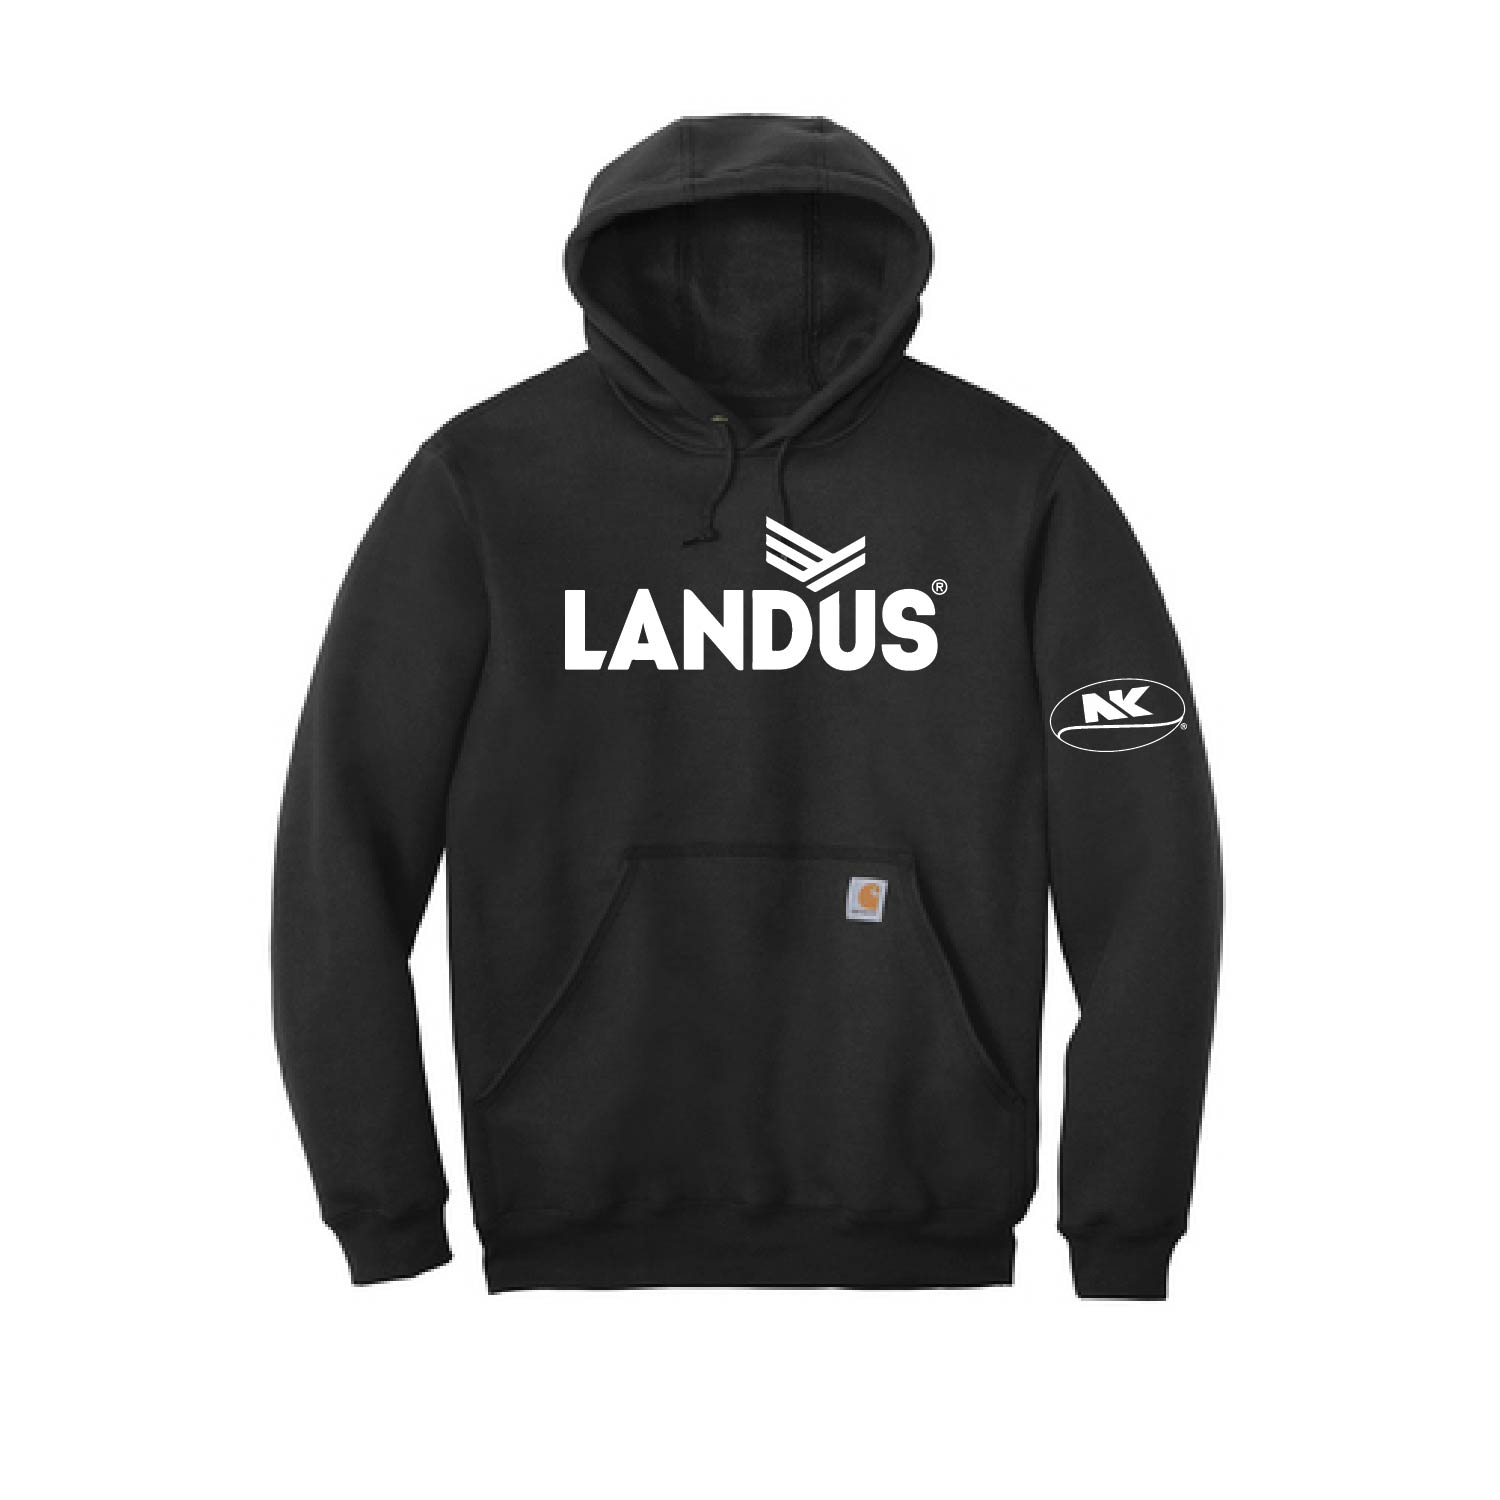 Landus/NK Sweatshirts